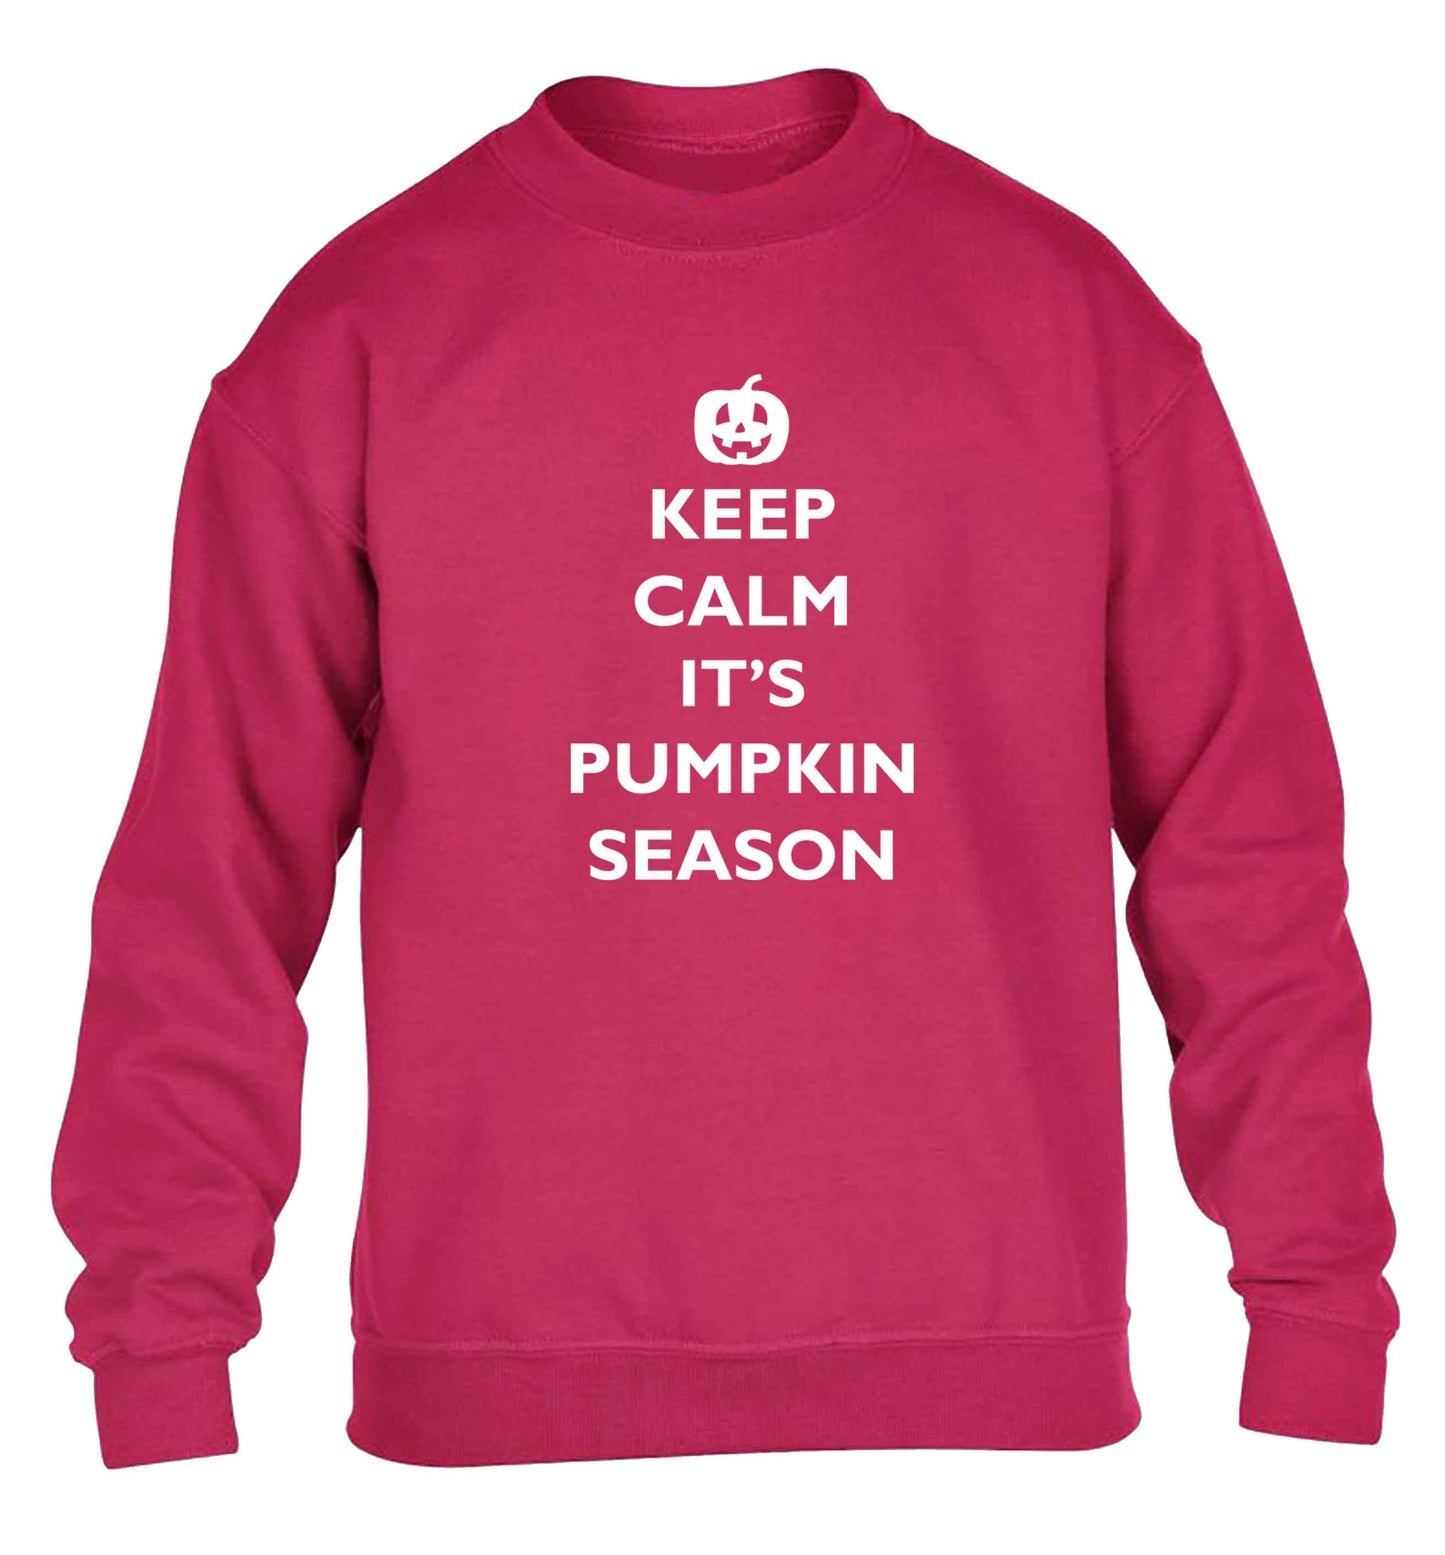 Calm Pumpkin Season children's pink sweater 12-13 Years